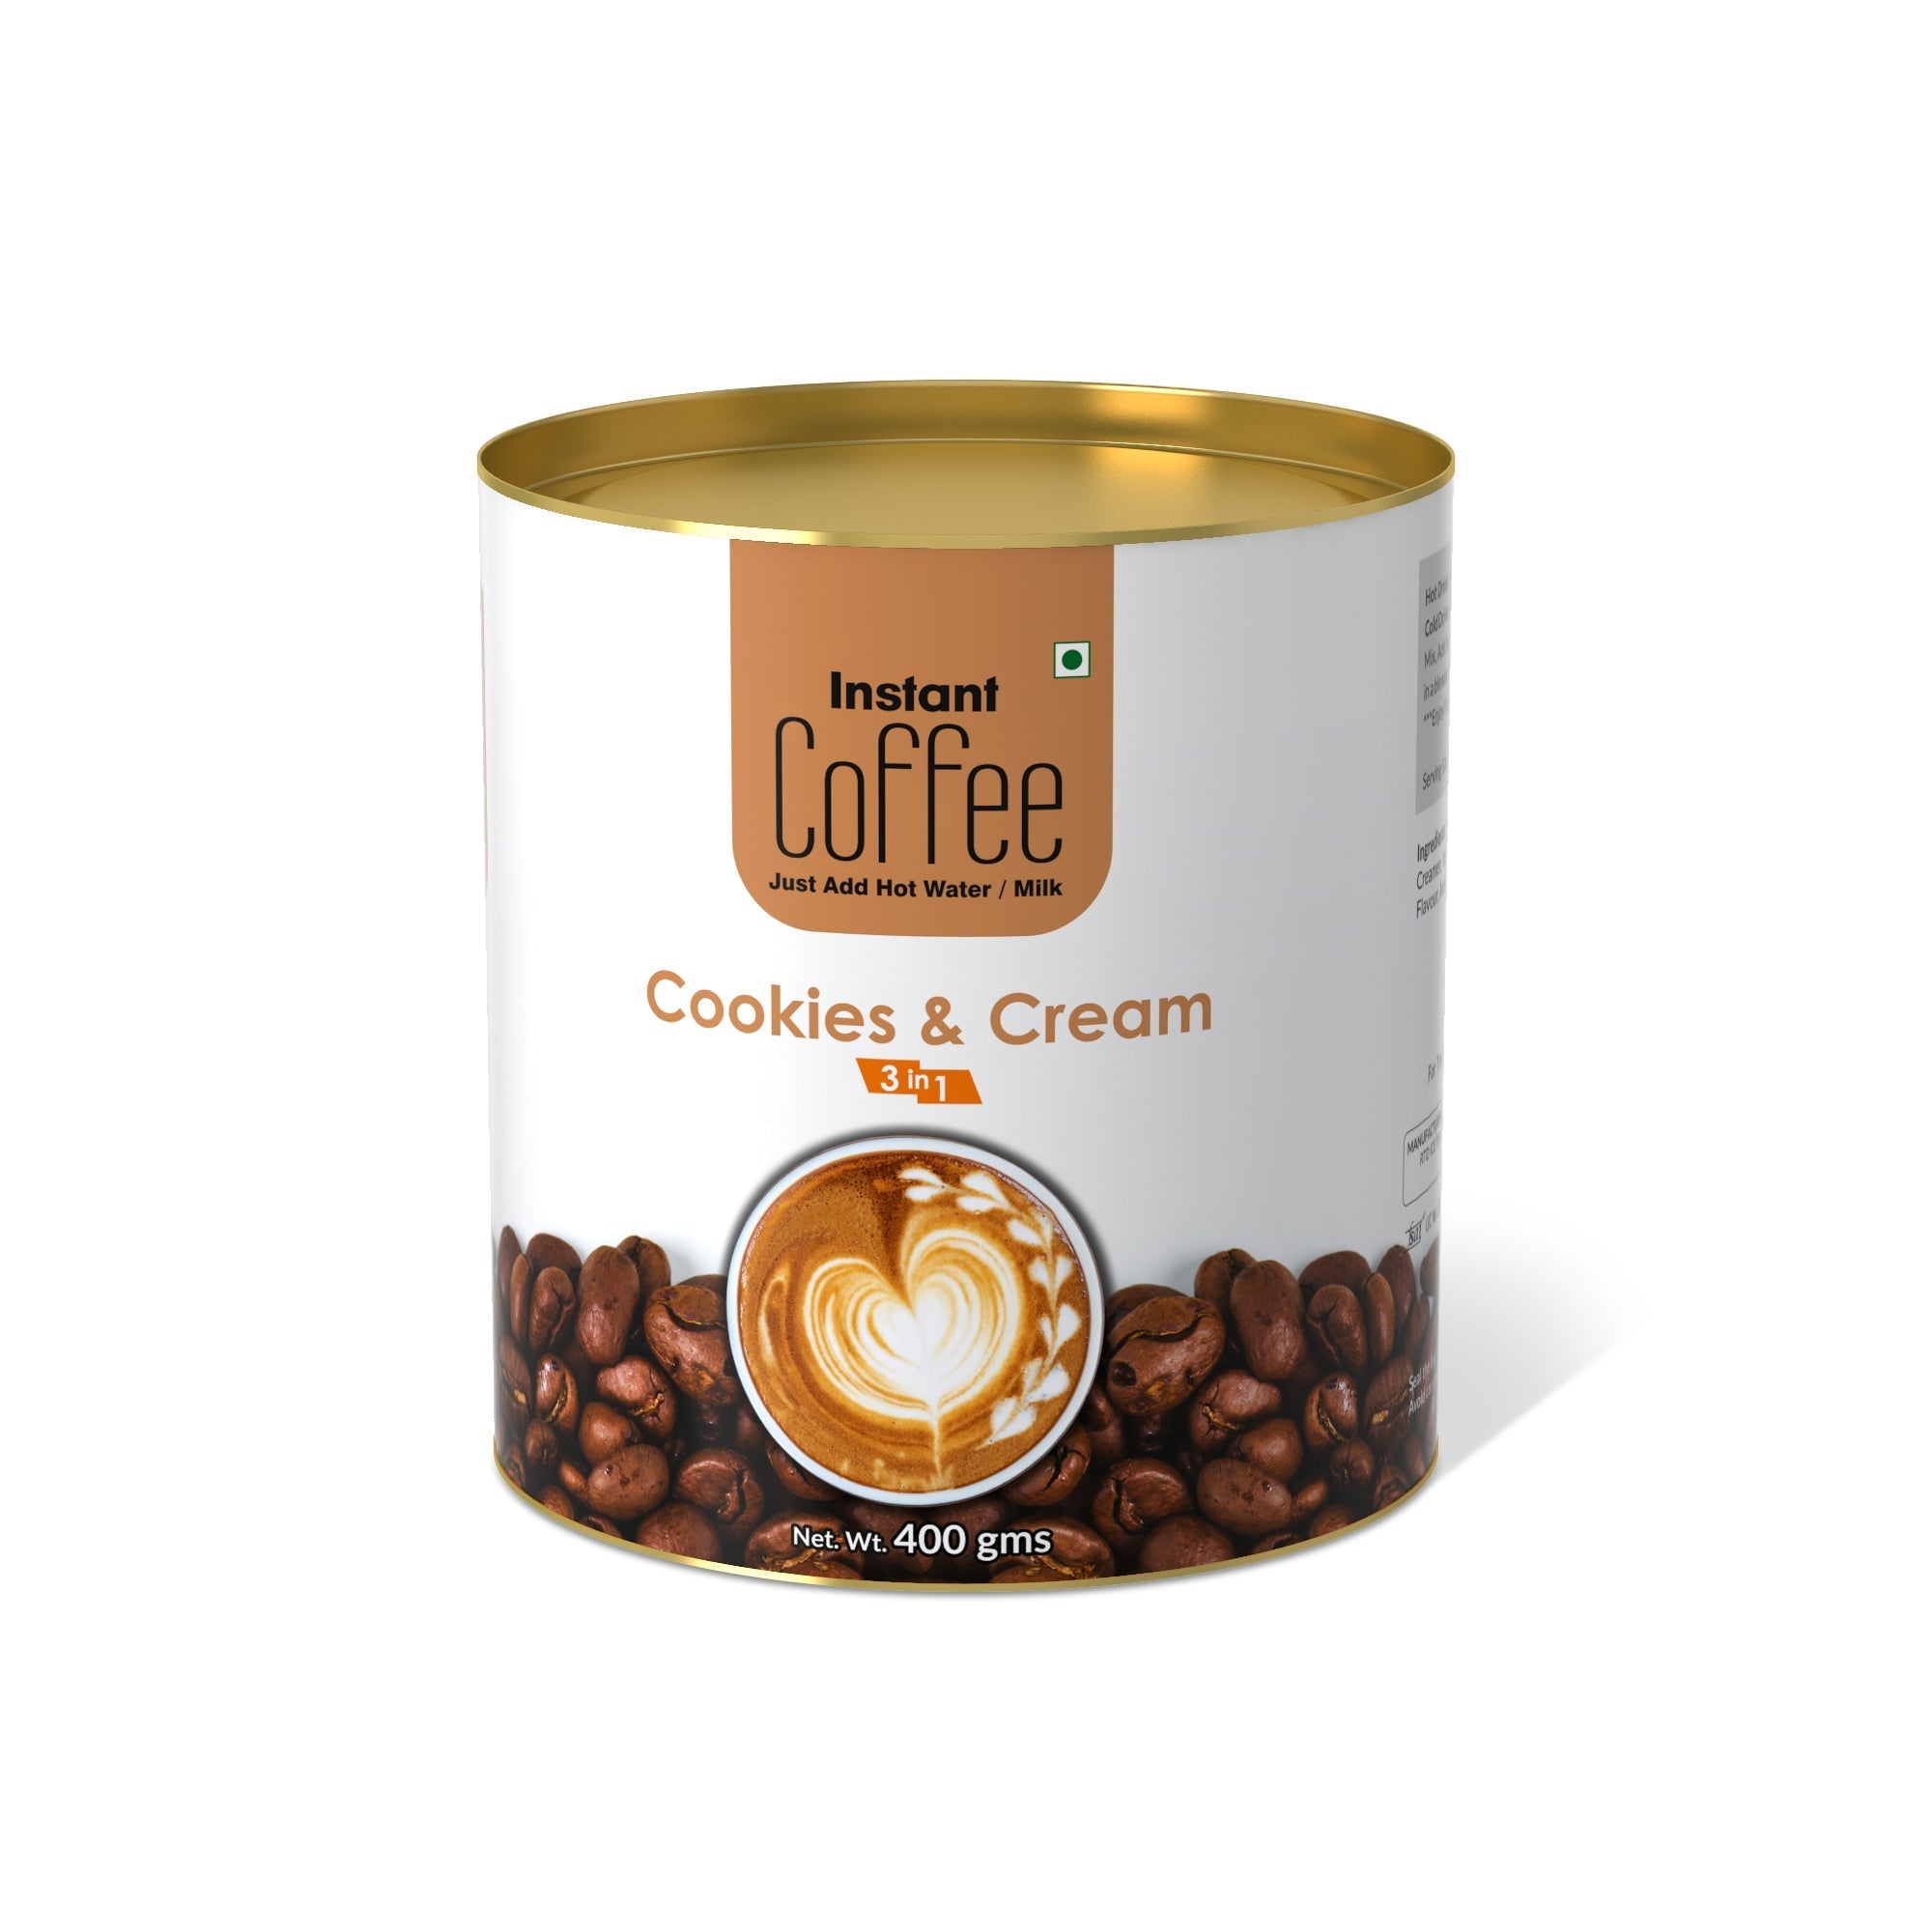 Cookies & Cream Instant Coffee Premix (3 in 1) - 400 gms